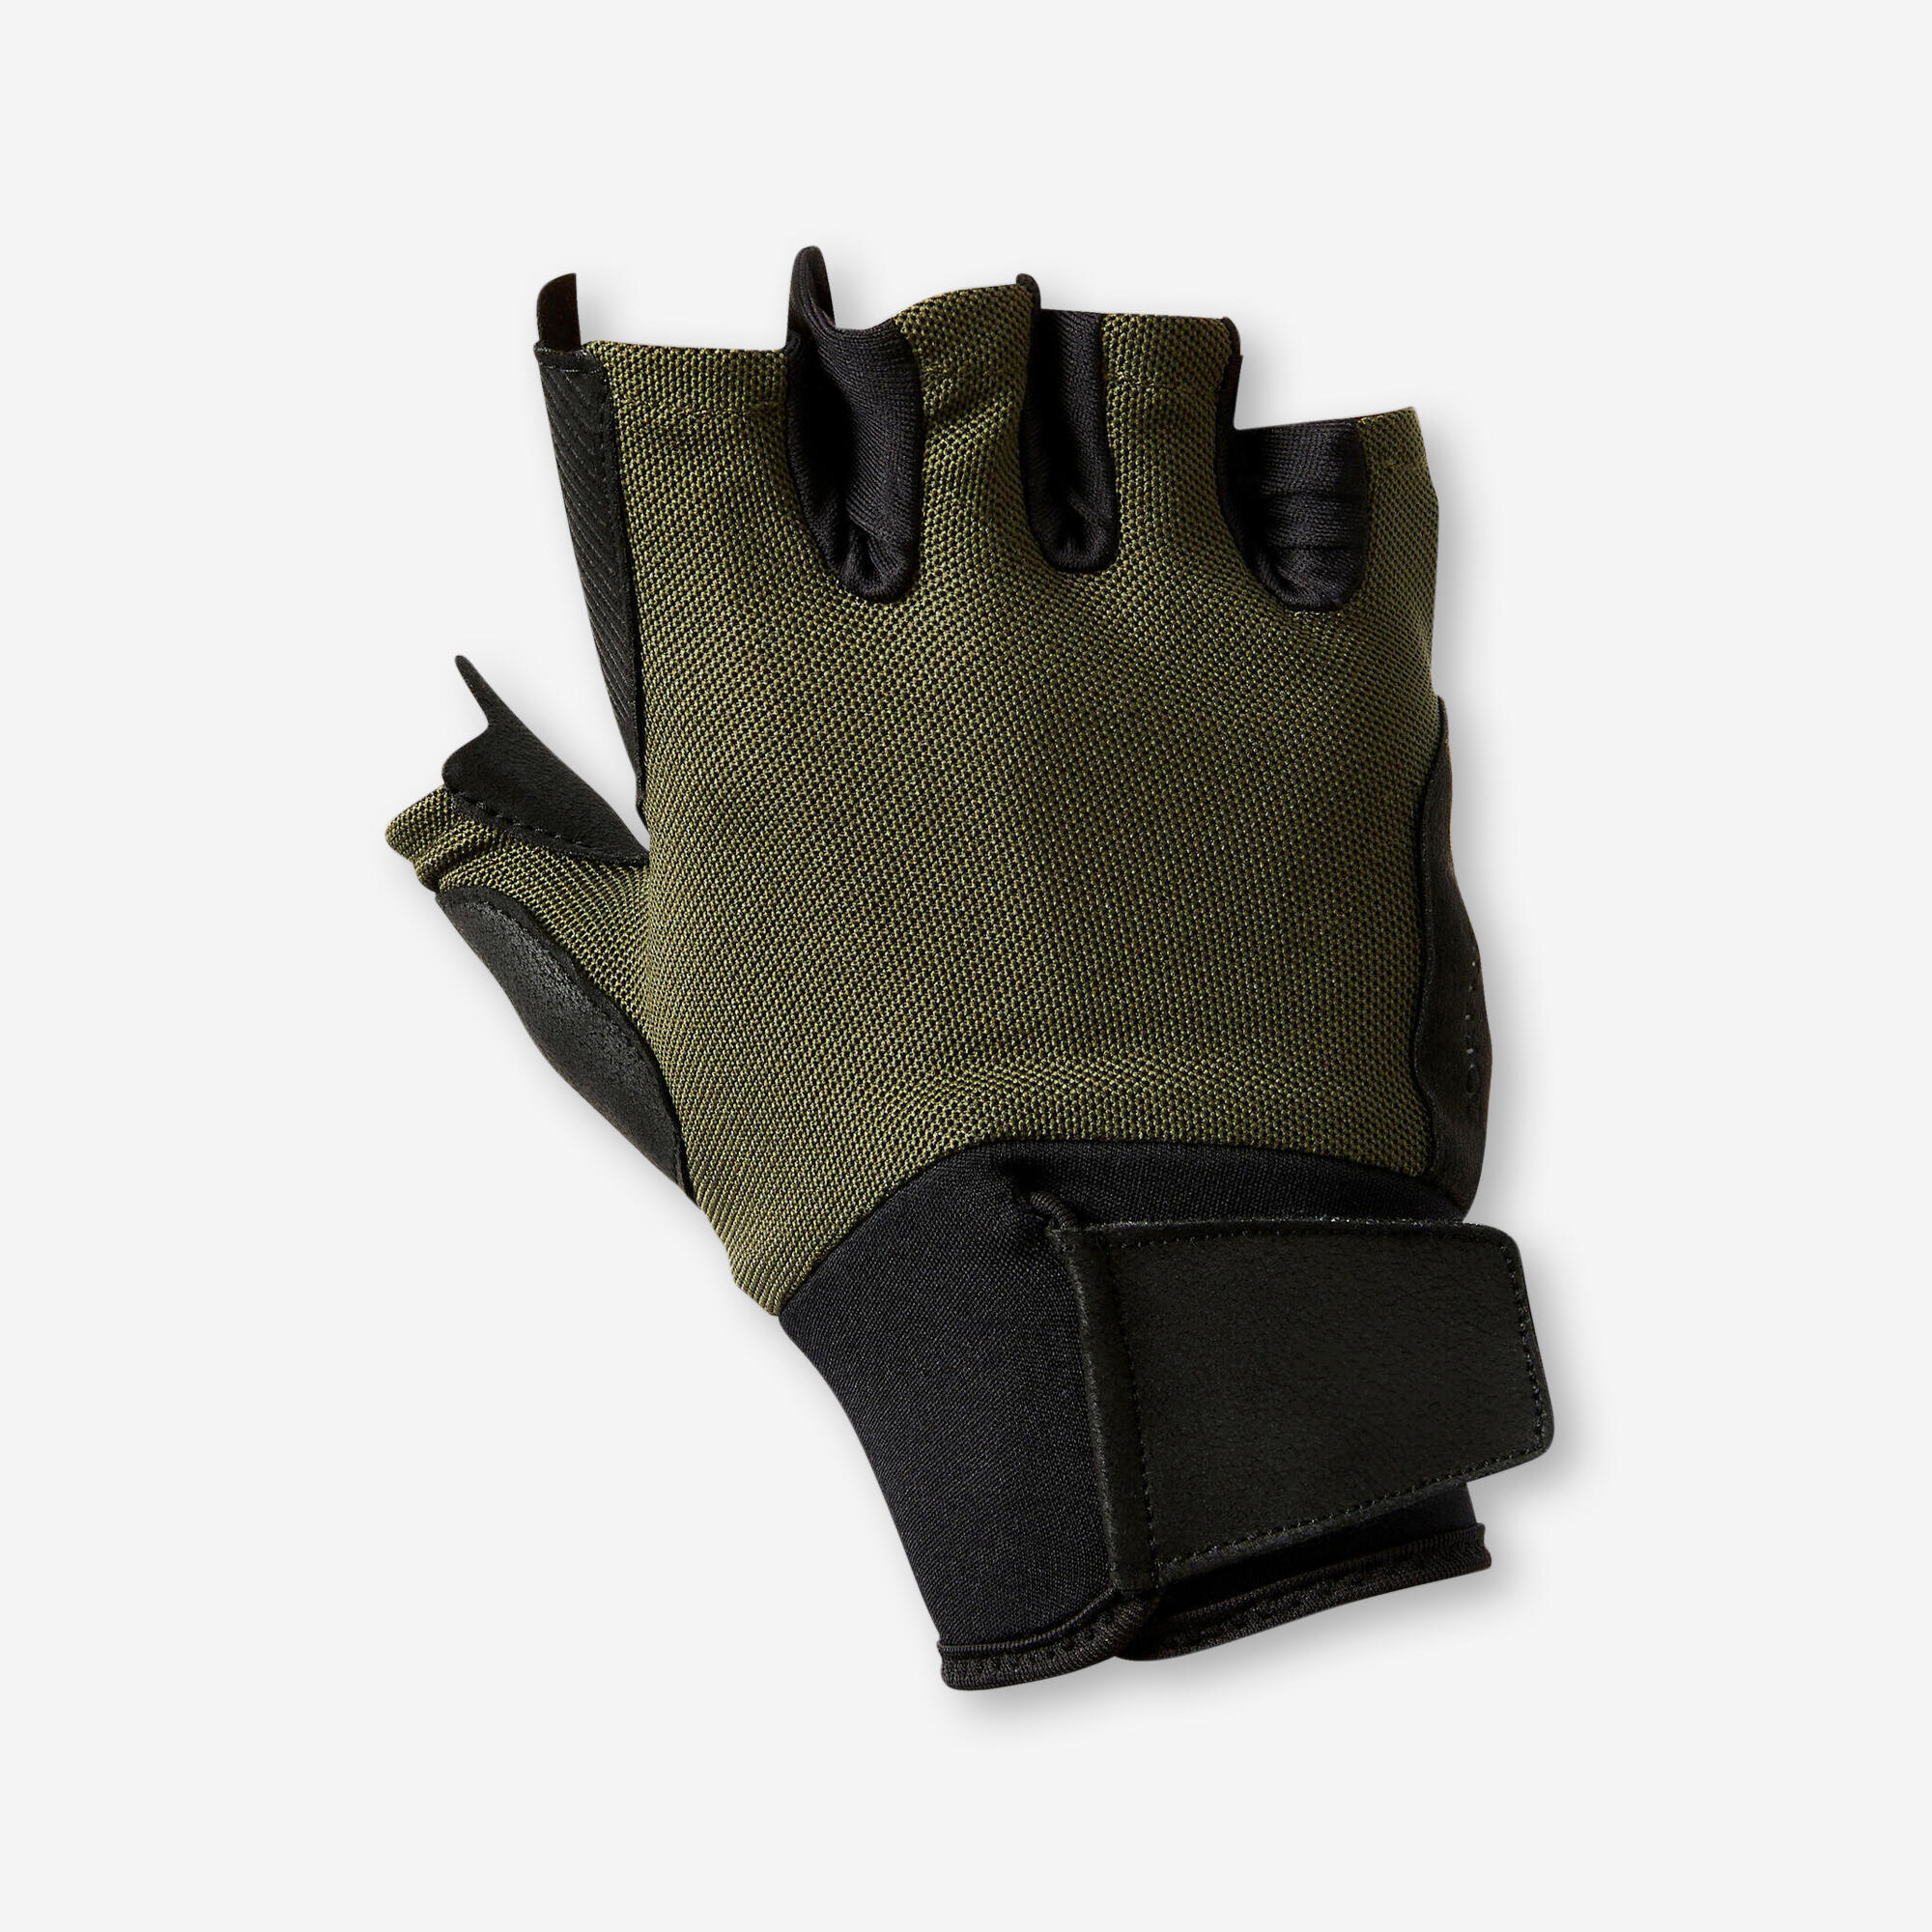 gants musculation confort - kaki - domyos